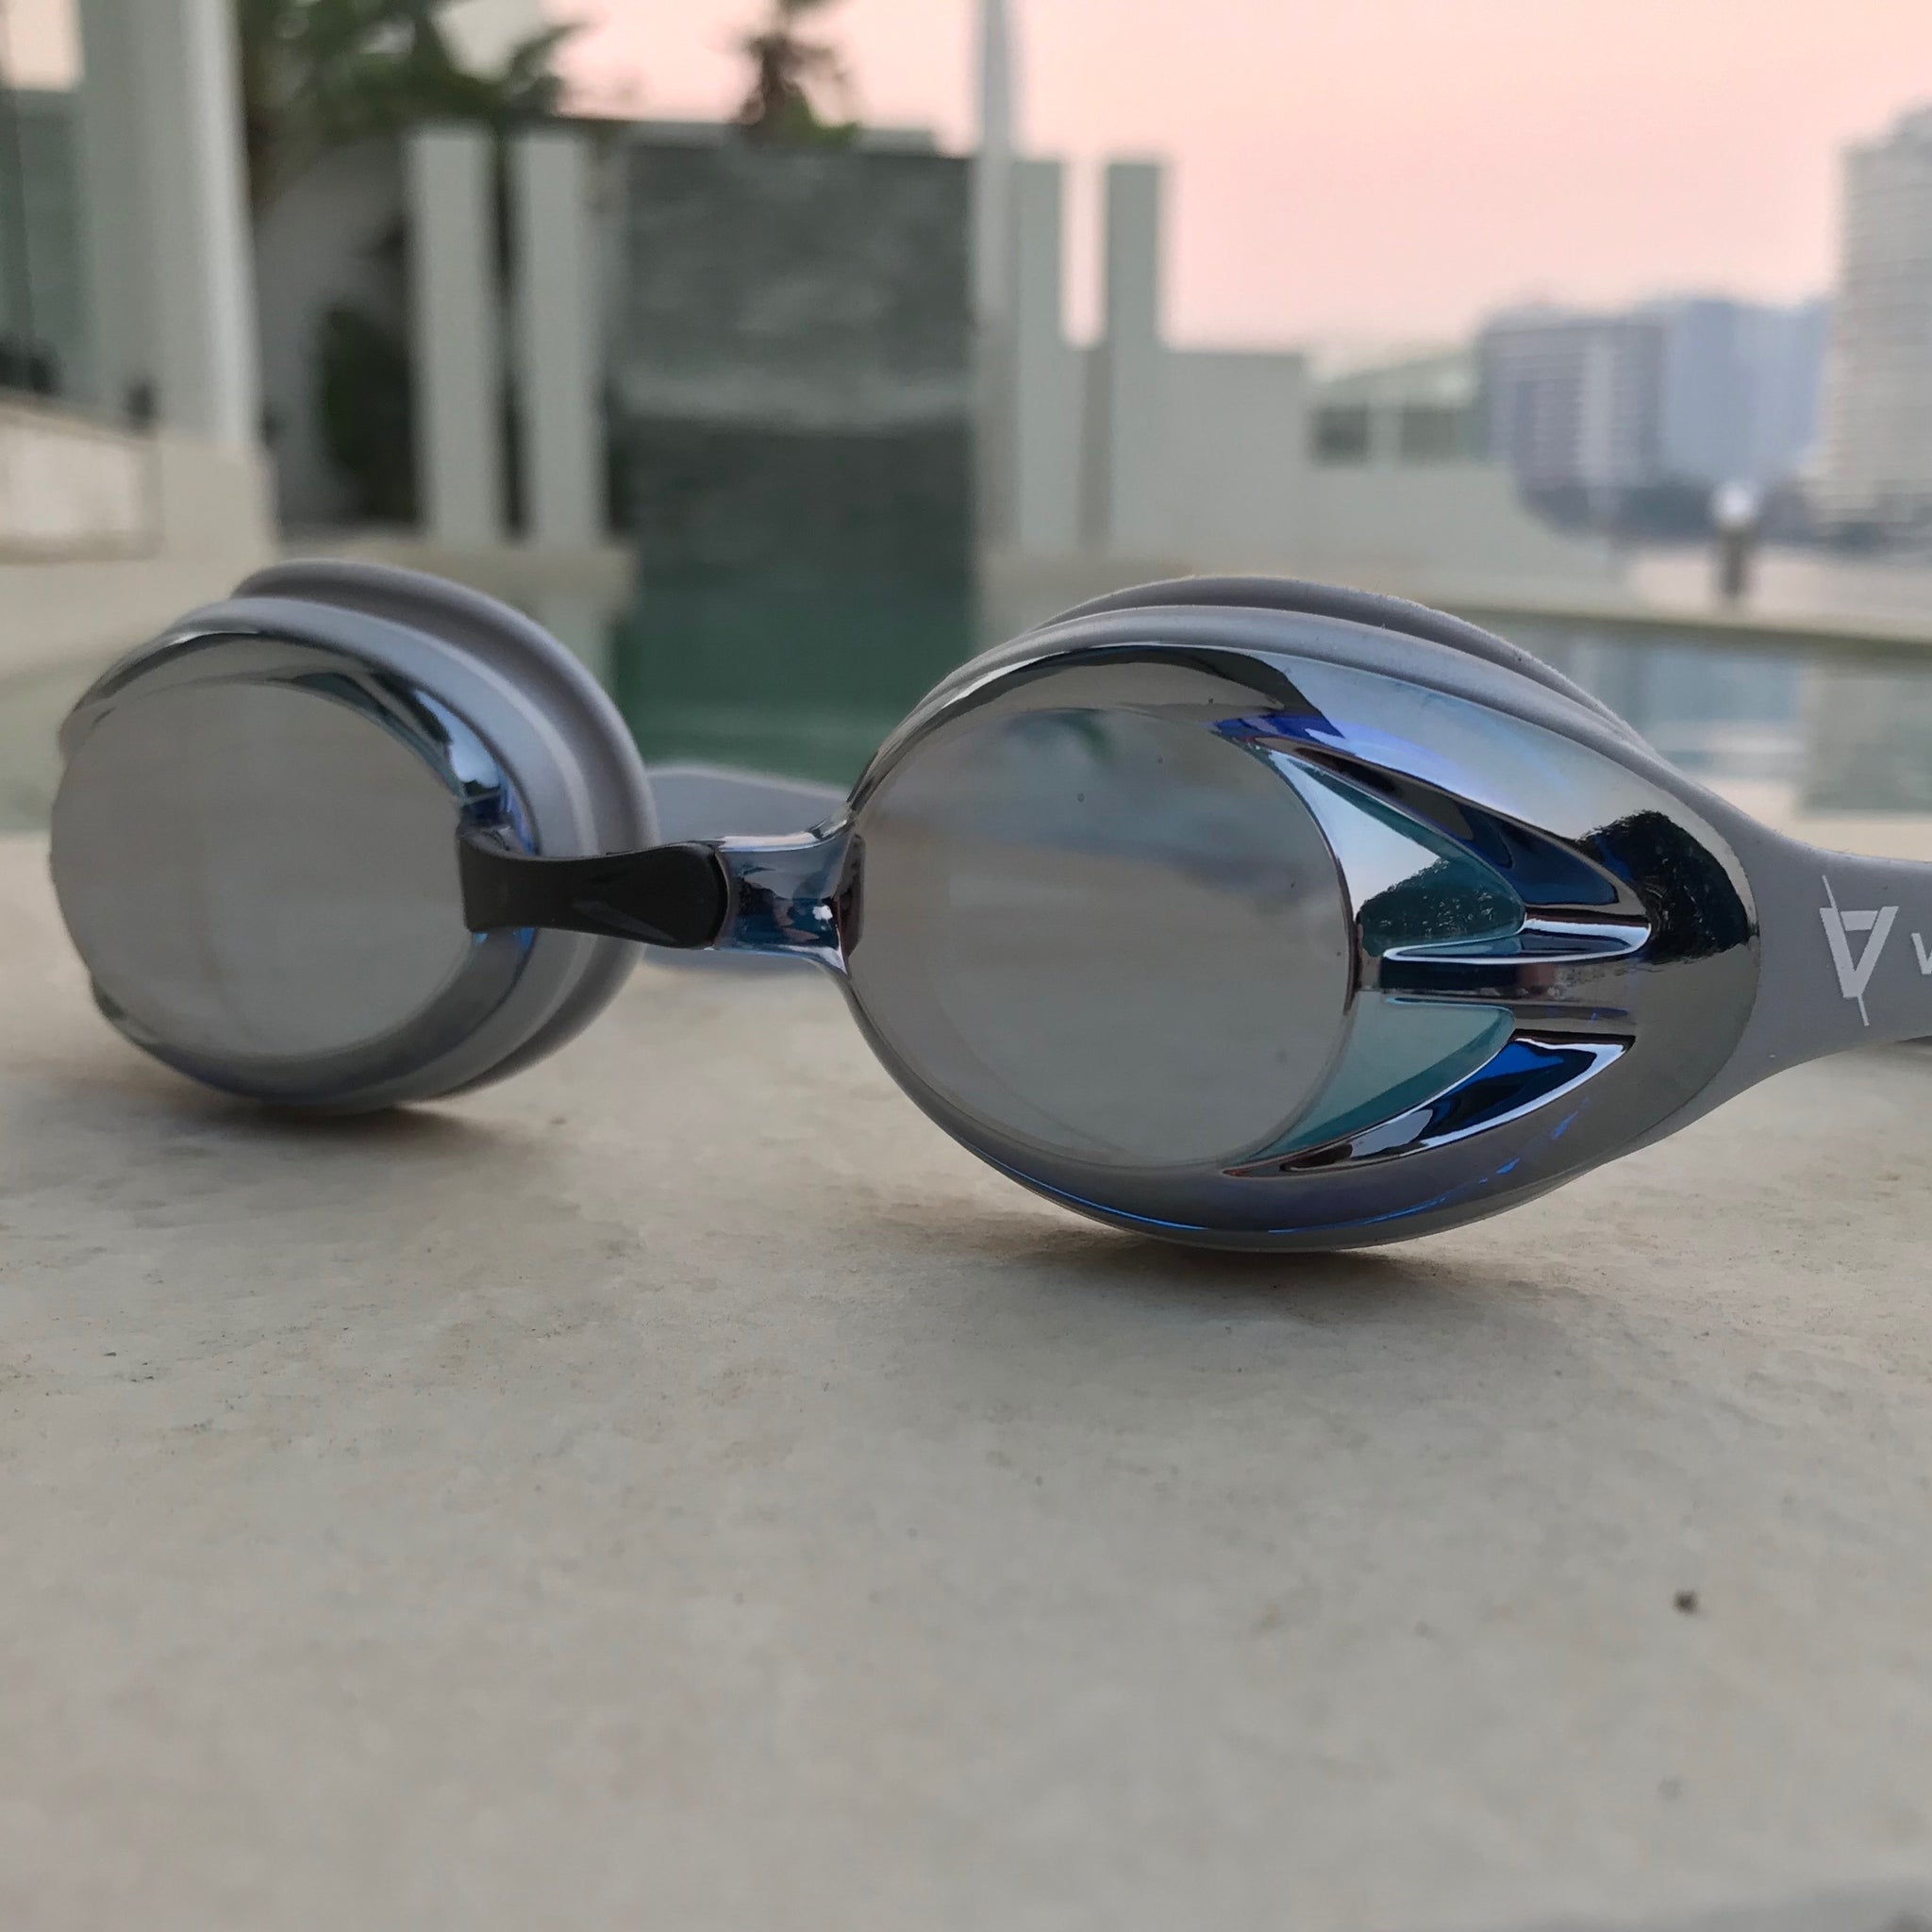 Volare Kirra Socket Goggles - Silver / Silver Mirror Lens